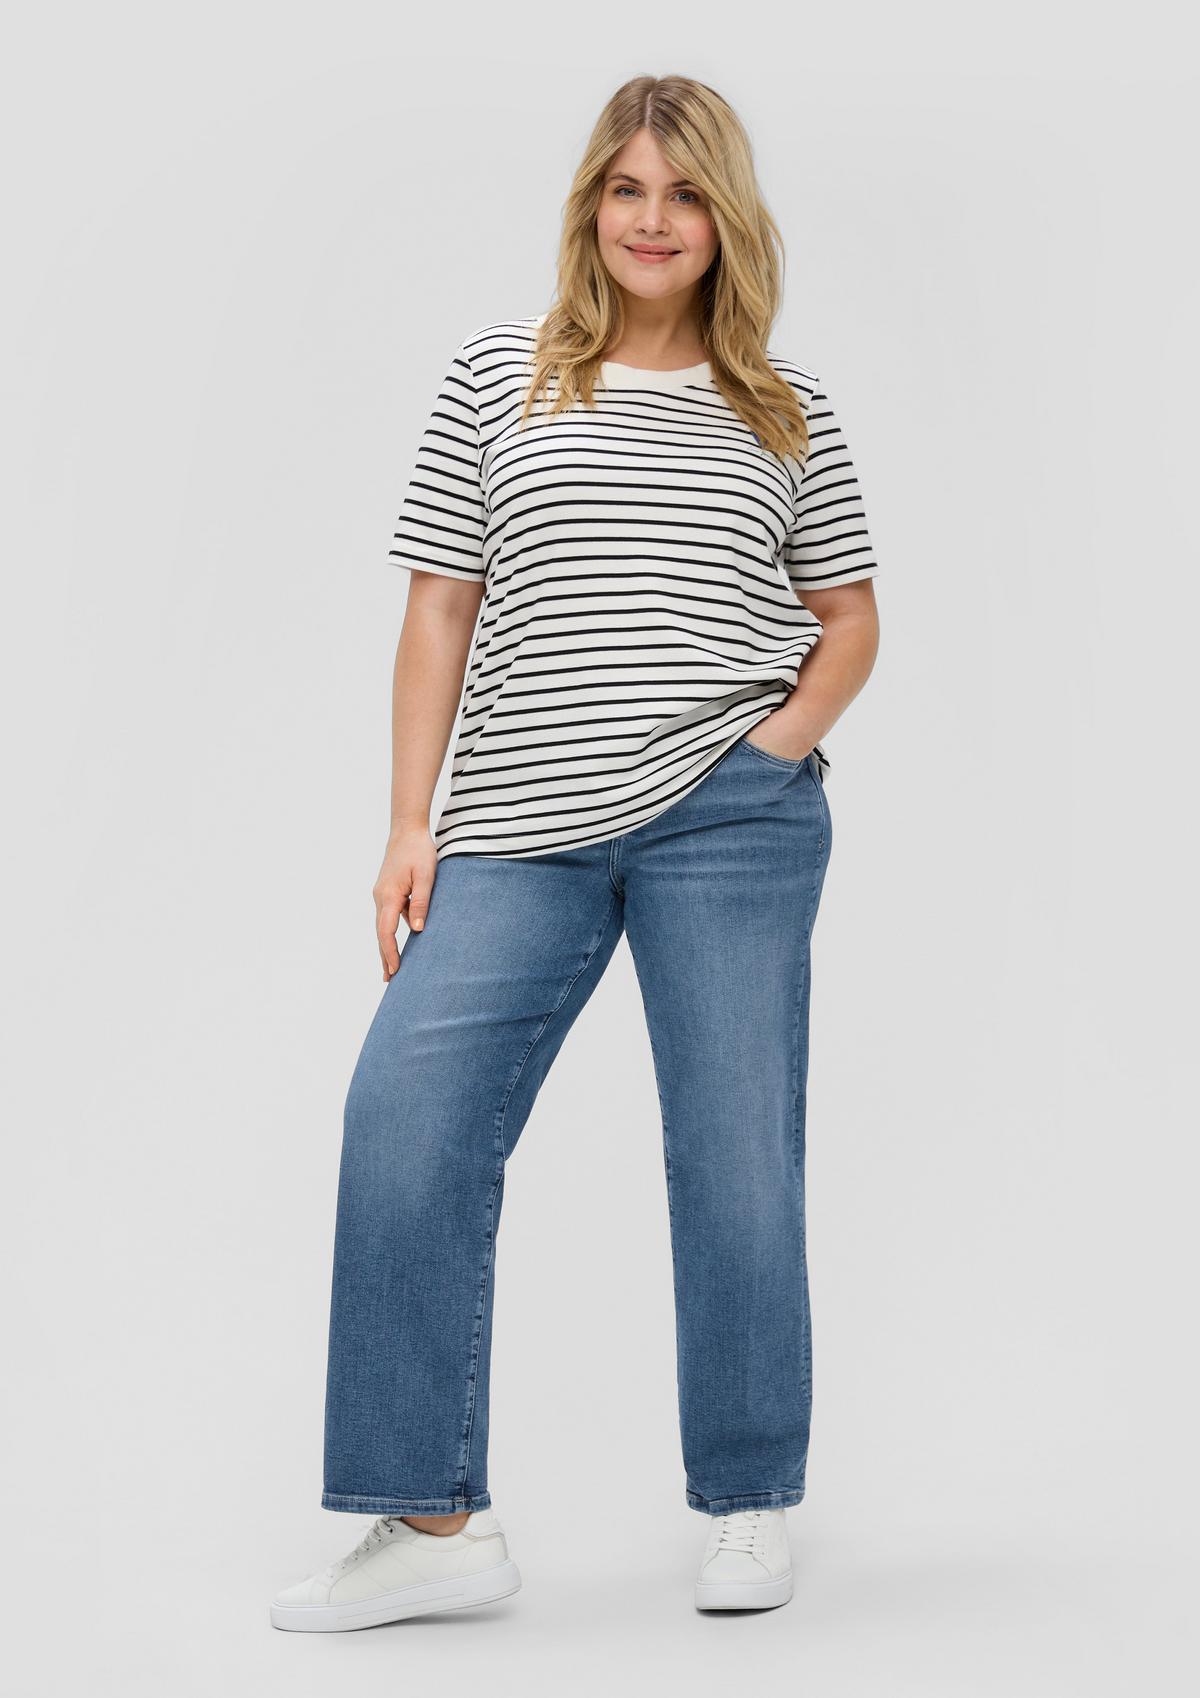 Jeans hlače/kroj Curvy Fit/Mid Rise/ravne hlačnice